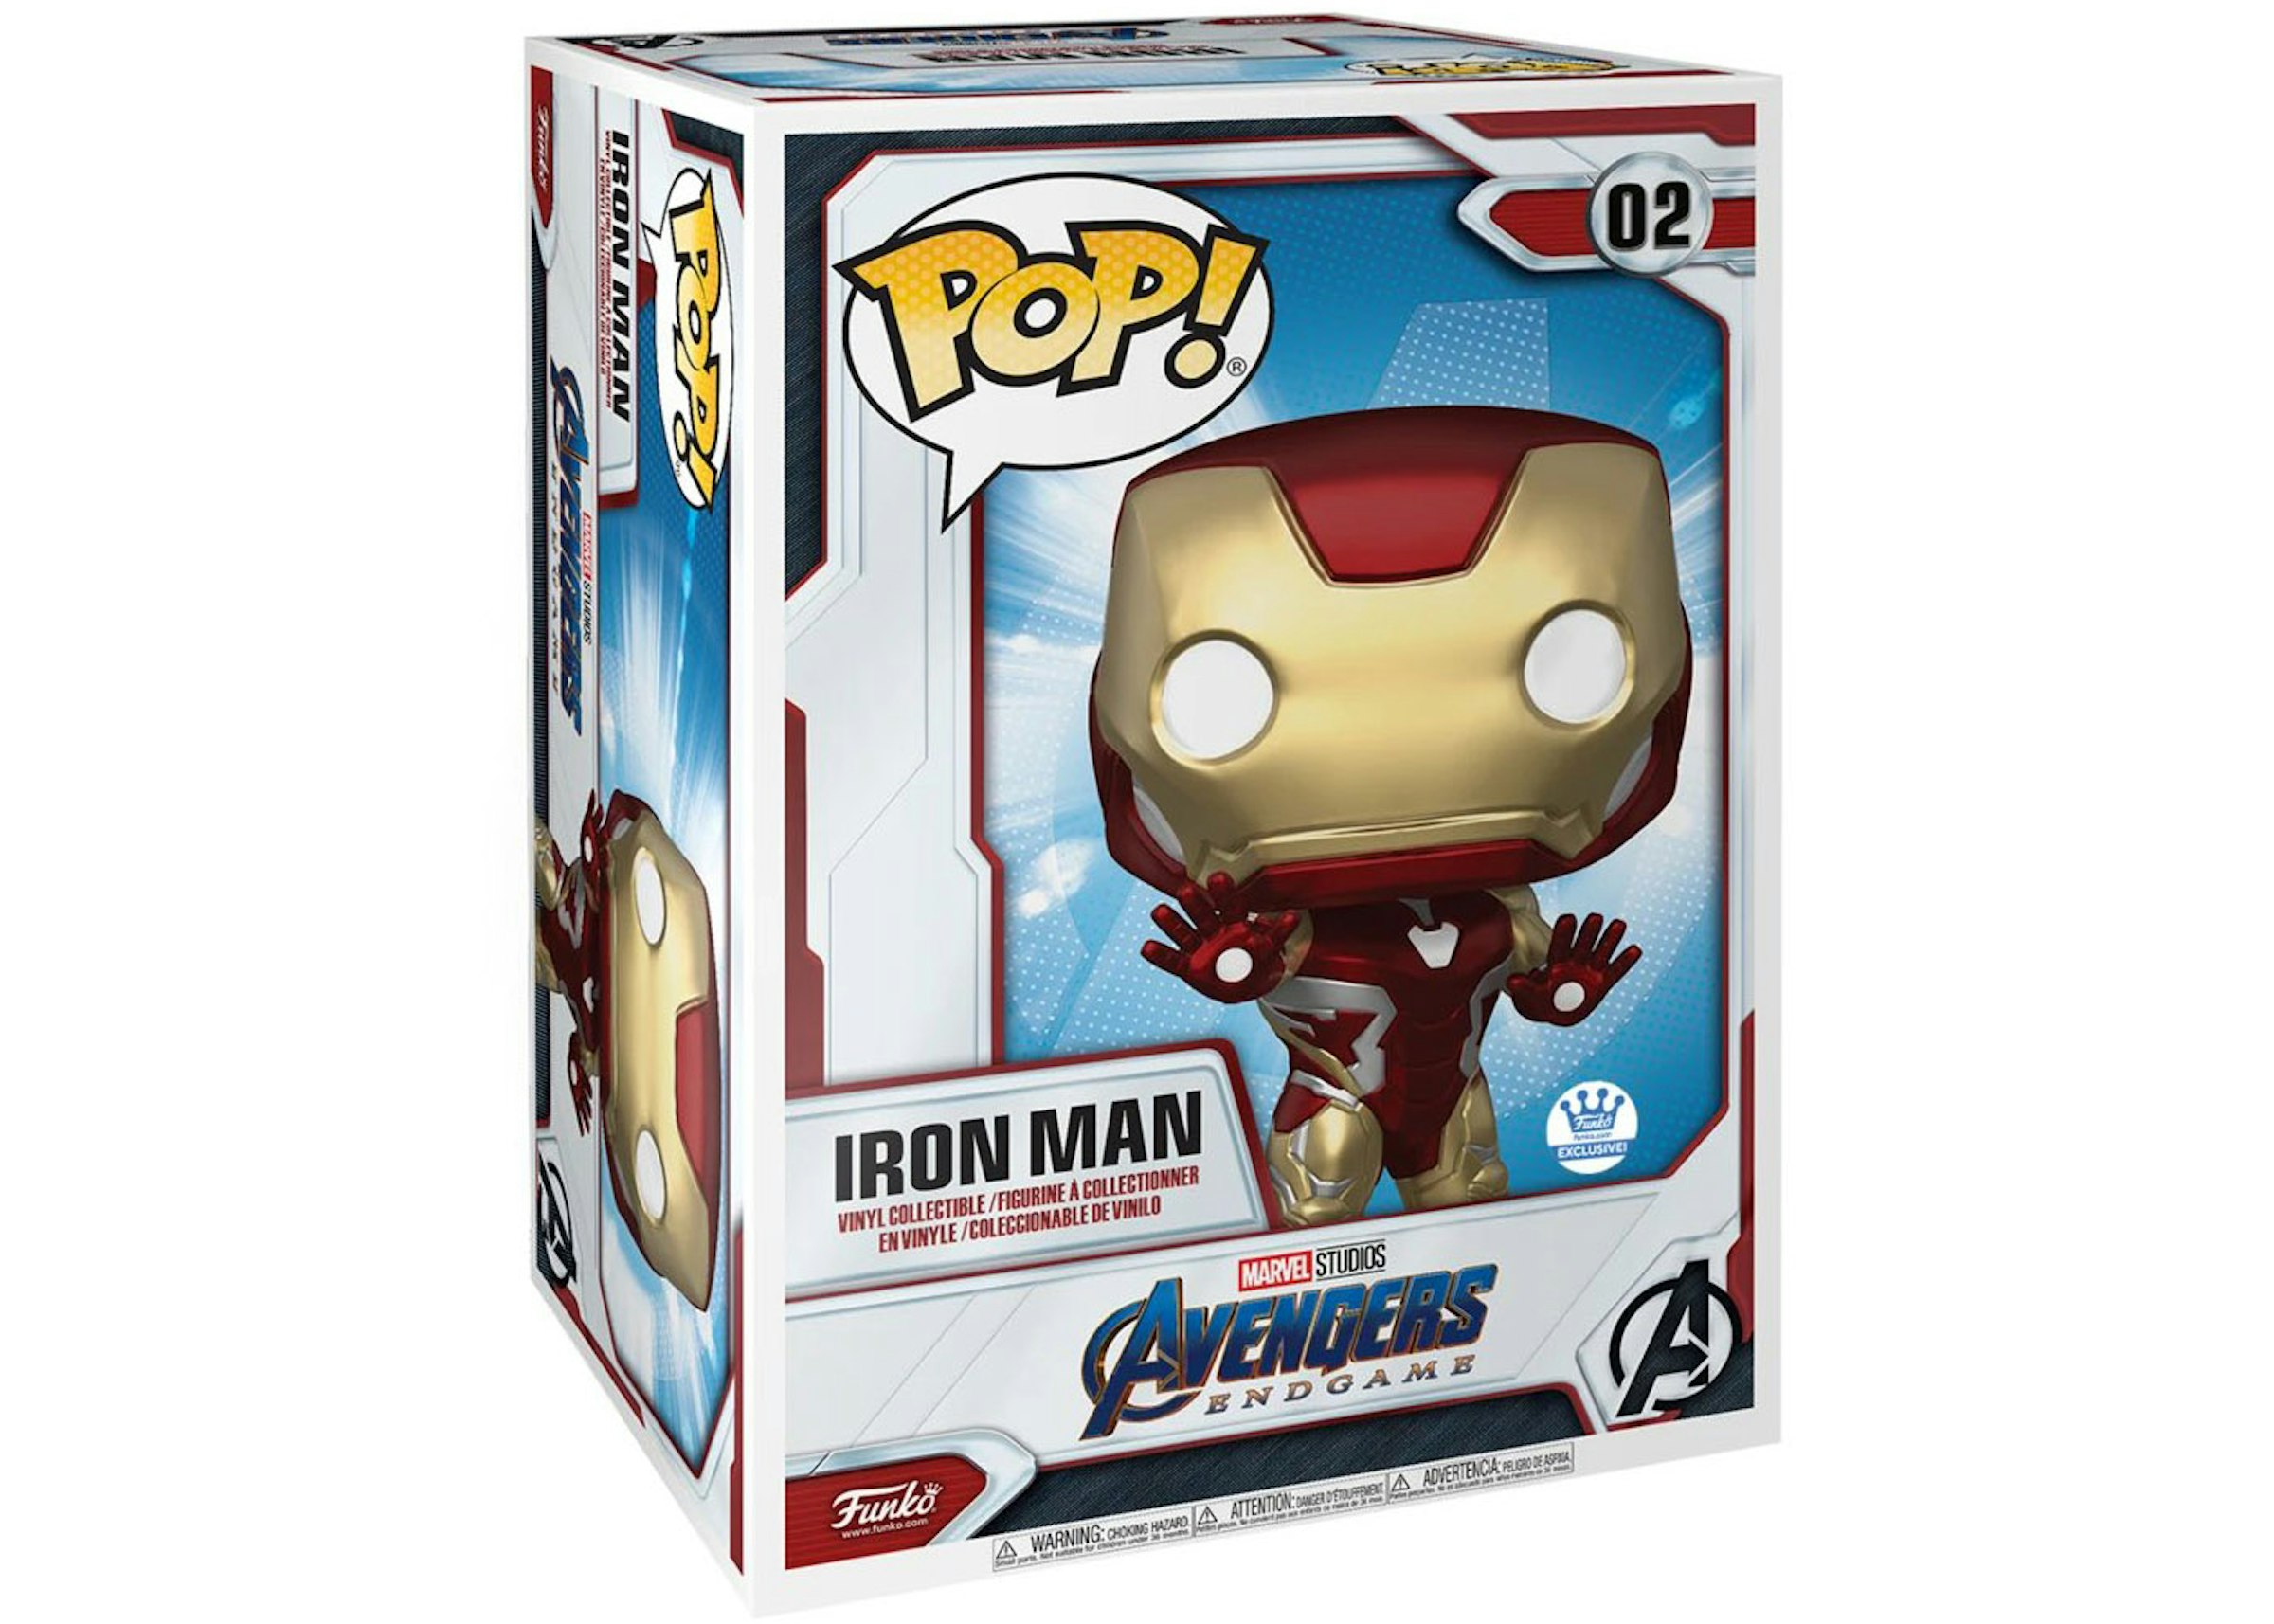 Funko Marvel End Game Iron Man 18 Inch Funko Shop Exclusive Figure #02 FW21 - US